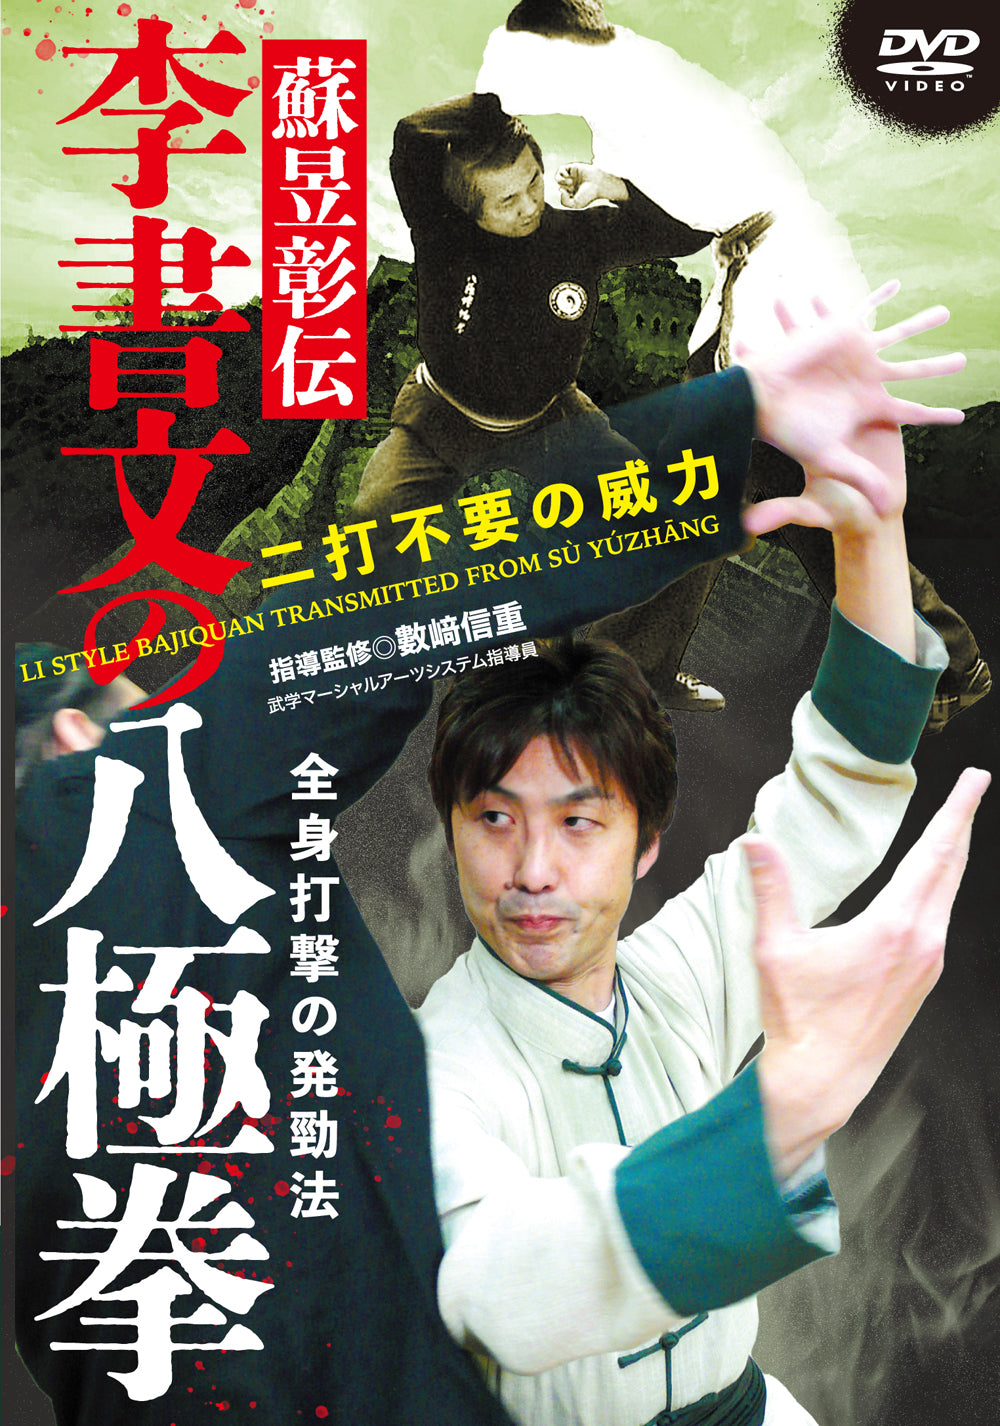 Li Style Bajiquan Transmitted from Su Yuzhang DVD by Nobushige Kazusaki